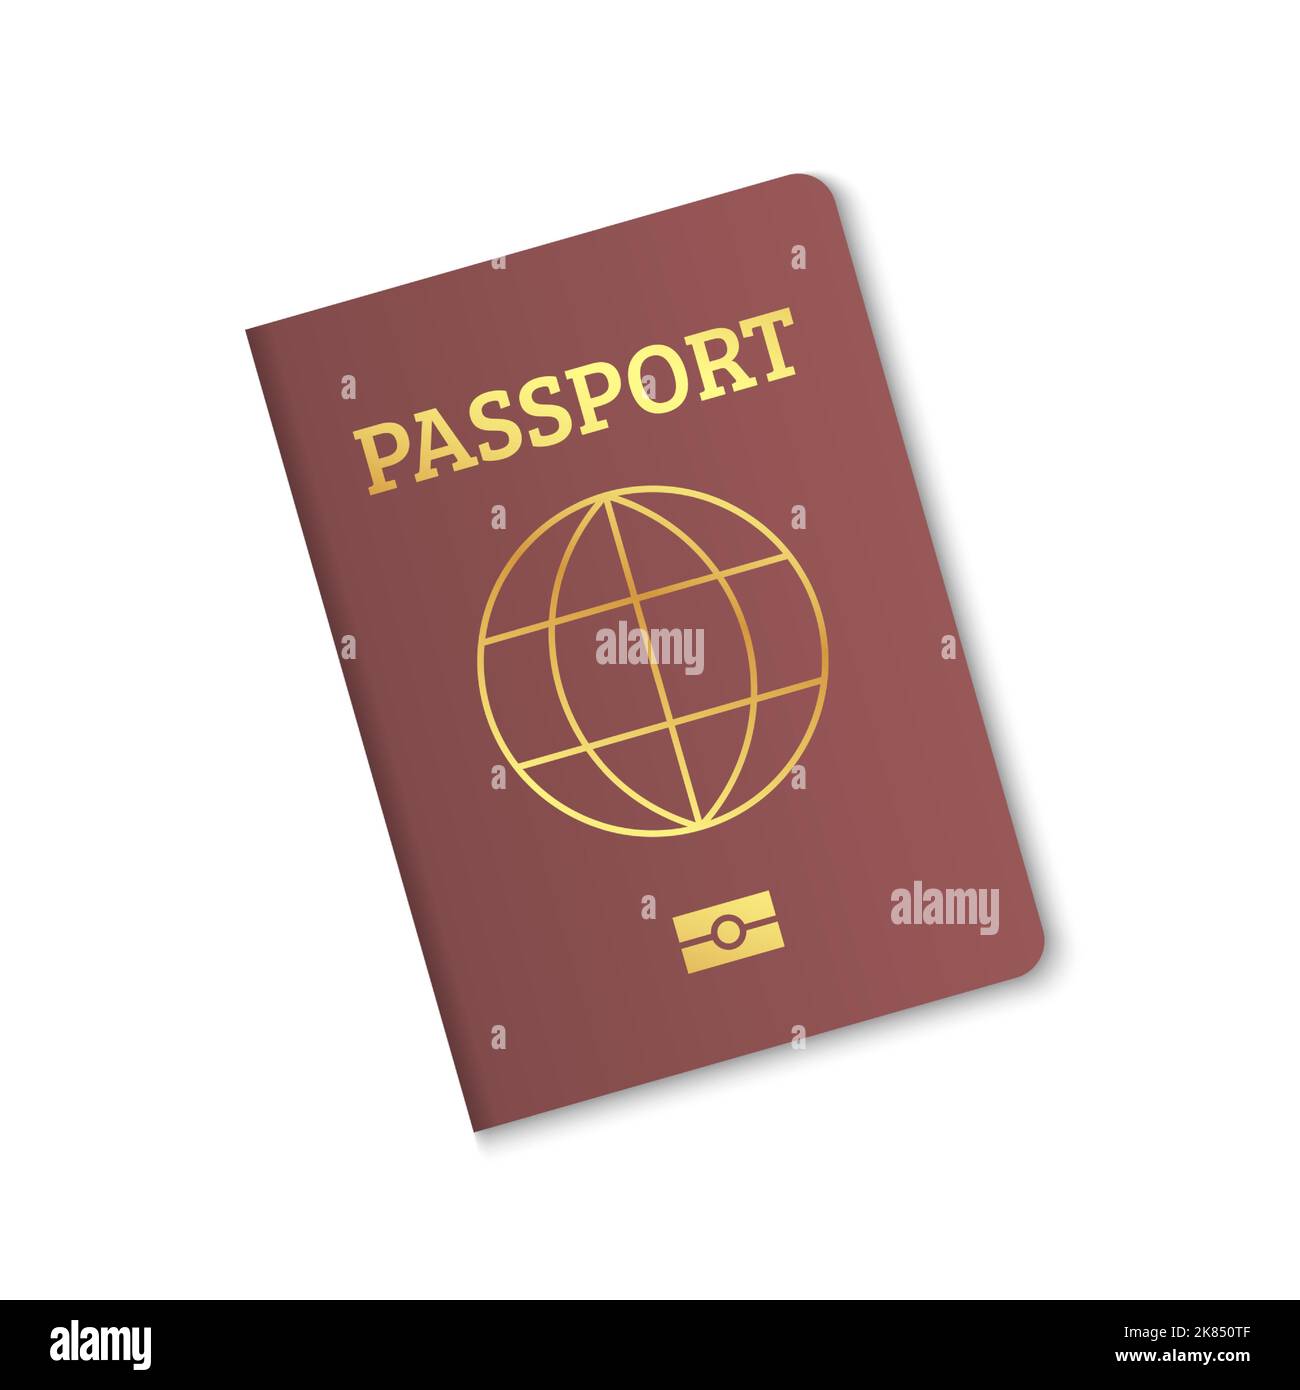 Passport cover Free Stock Vectors